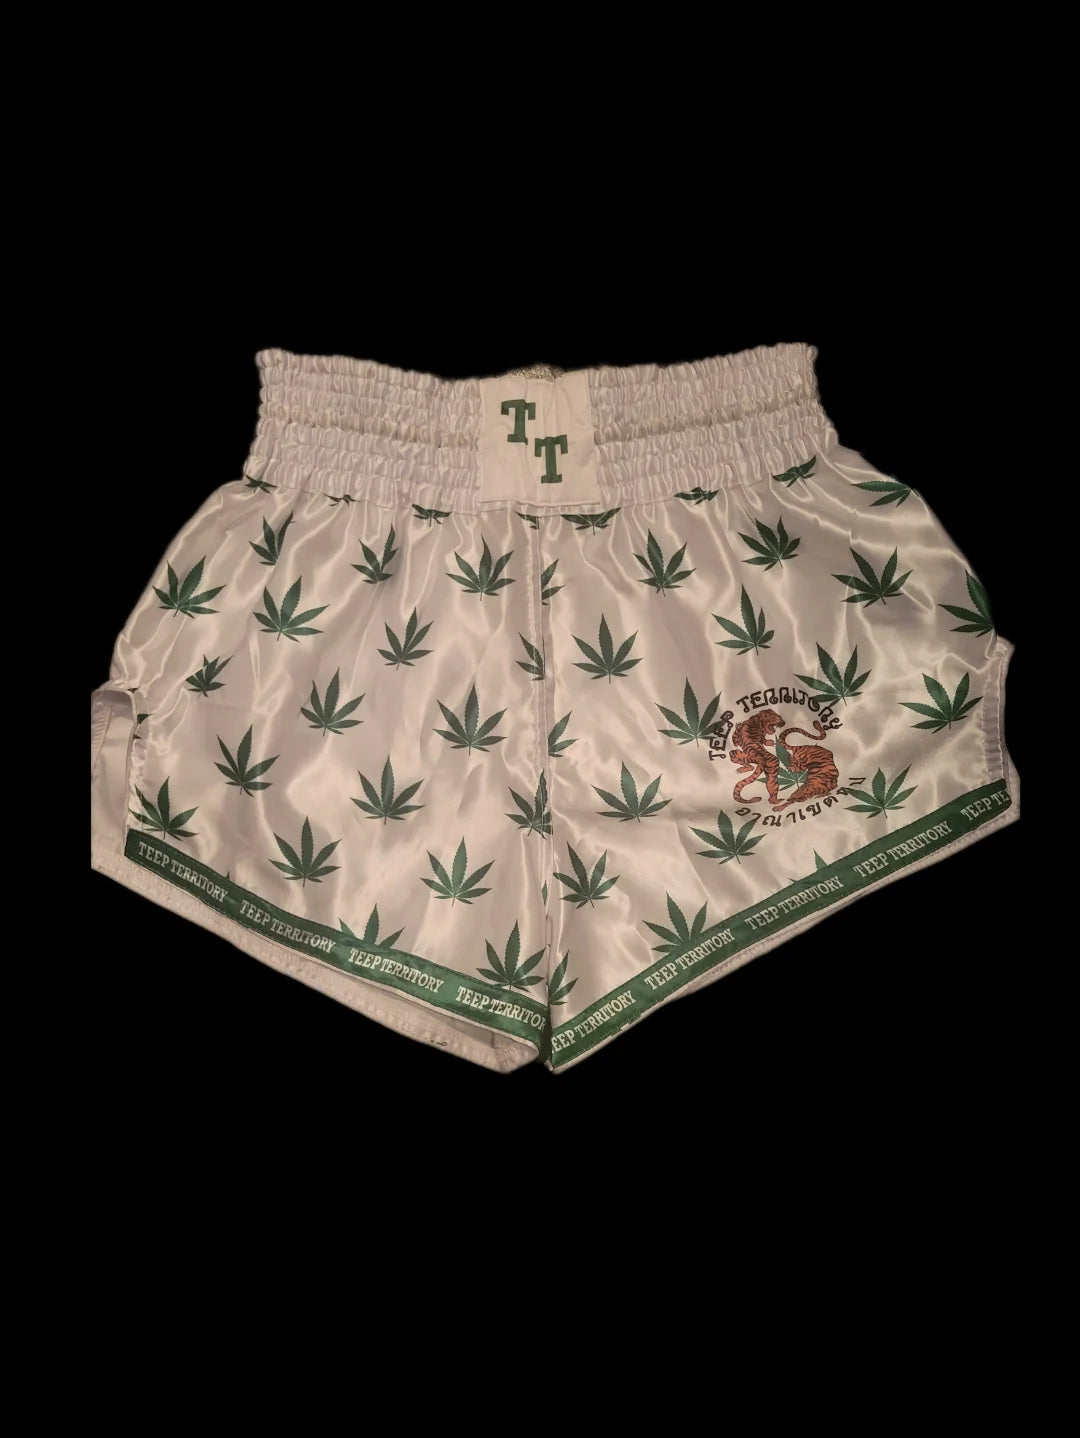 Teep Territory Cannabis Muay Thai Shorts (White)